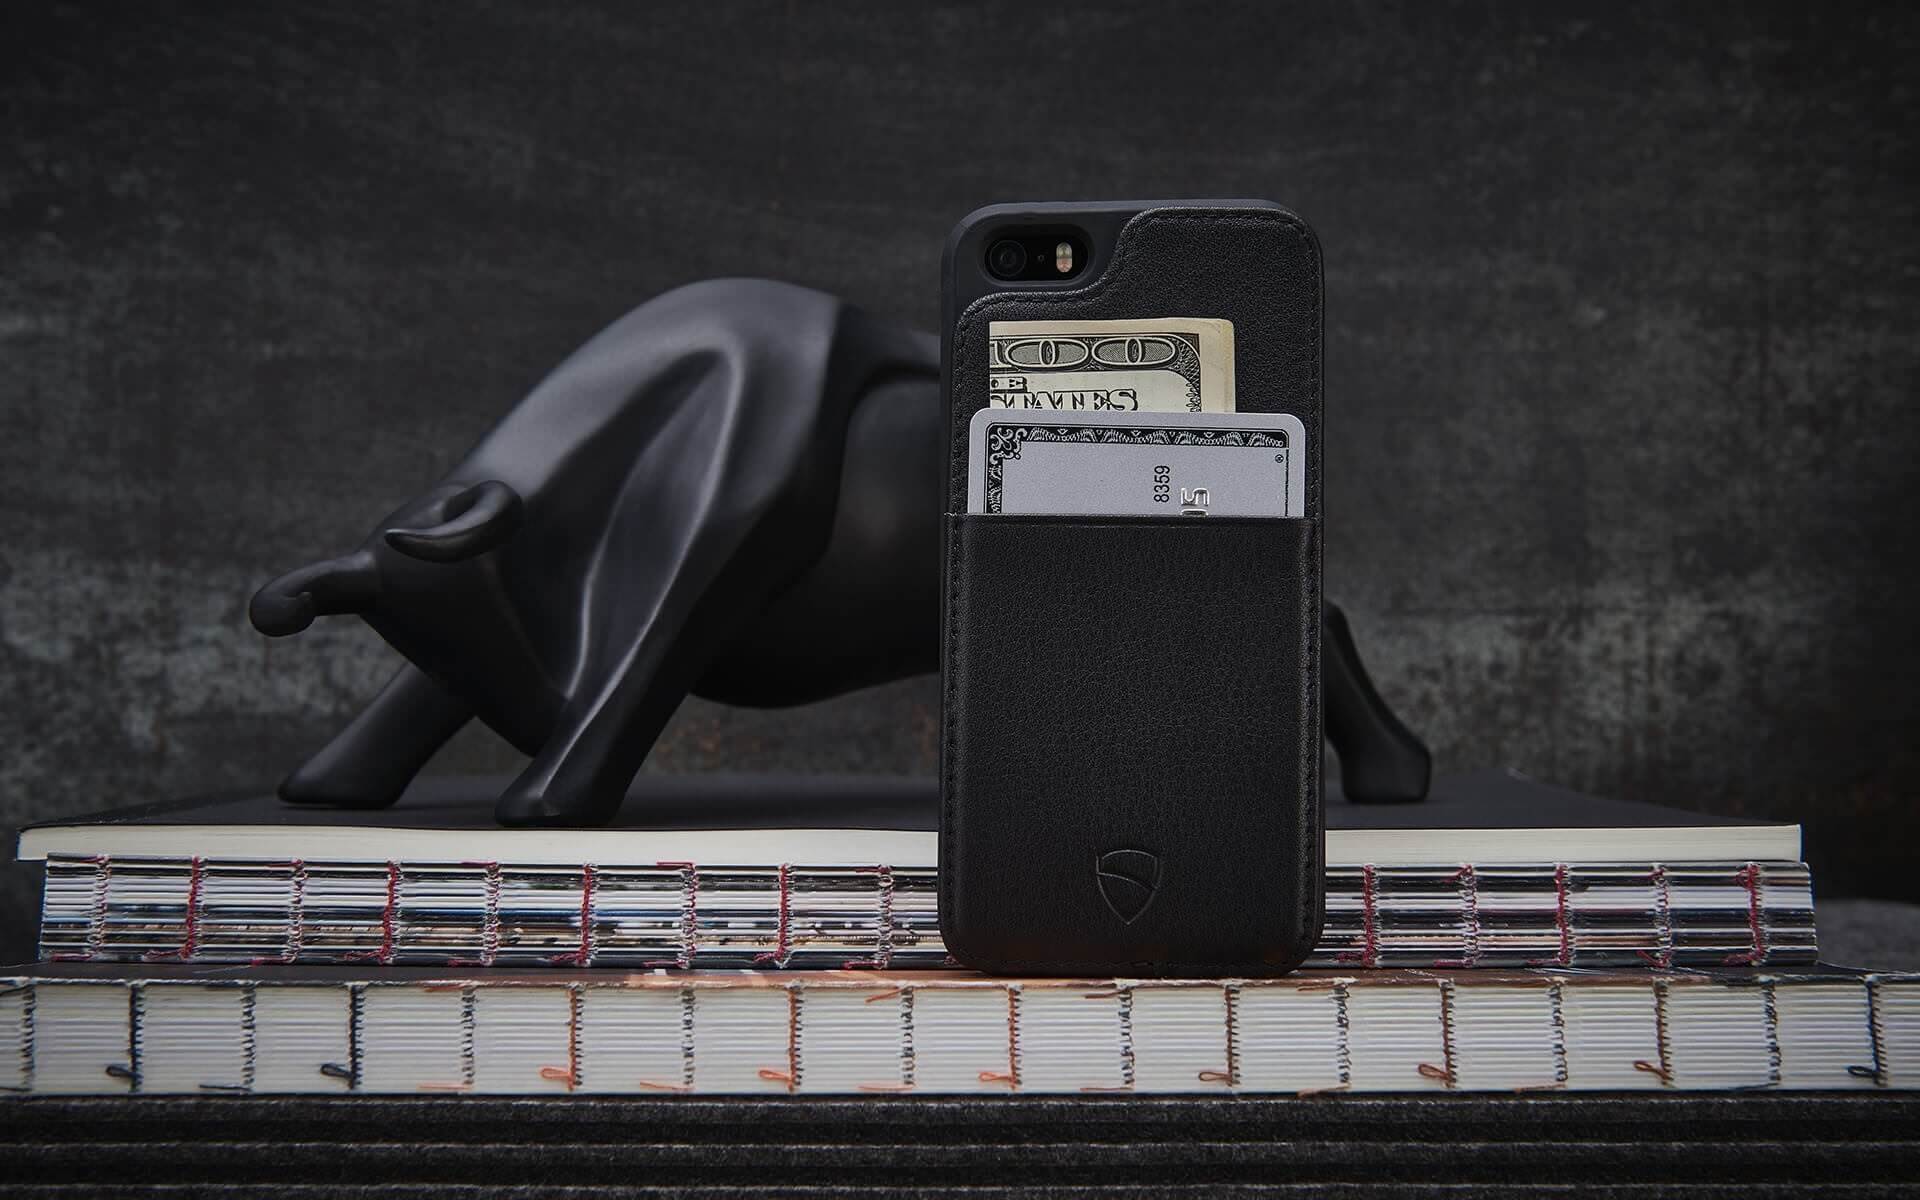 iPhone SE 2 / 3 Gen Leather Wallet Case Cover Card Holder for